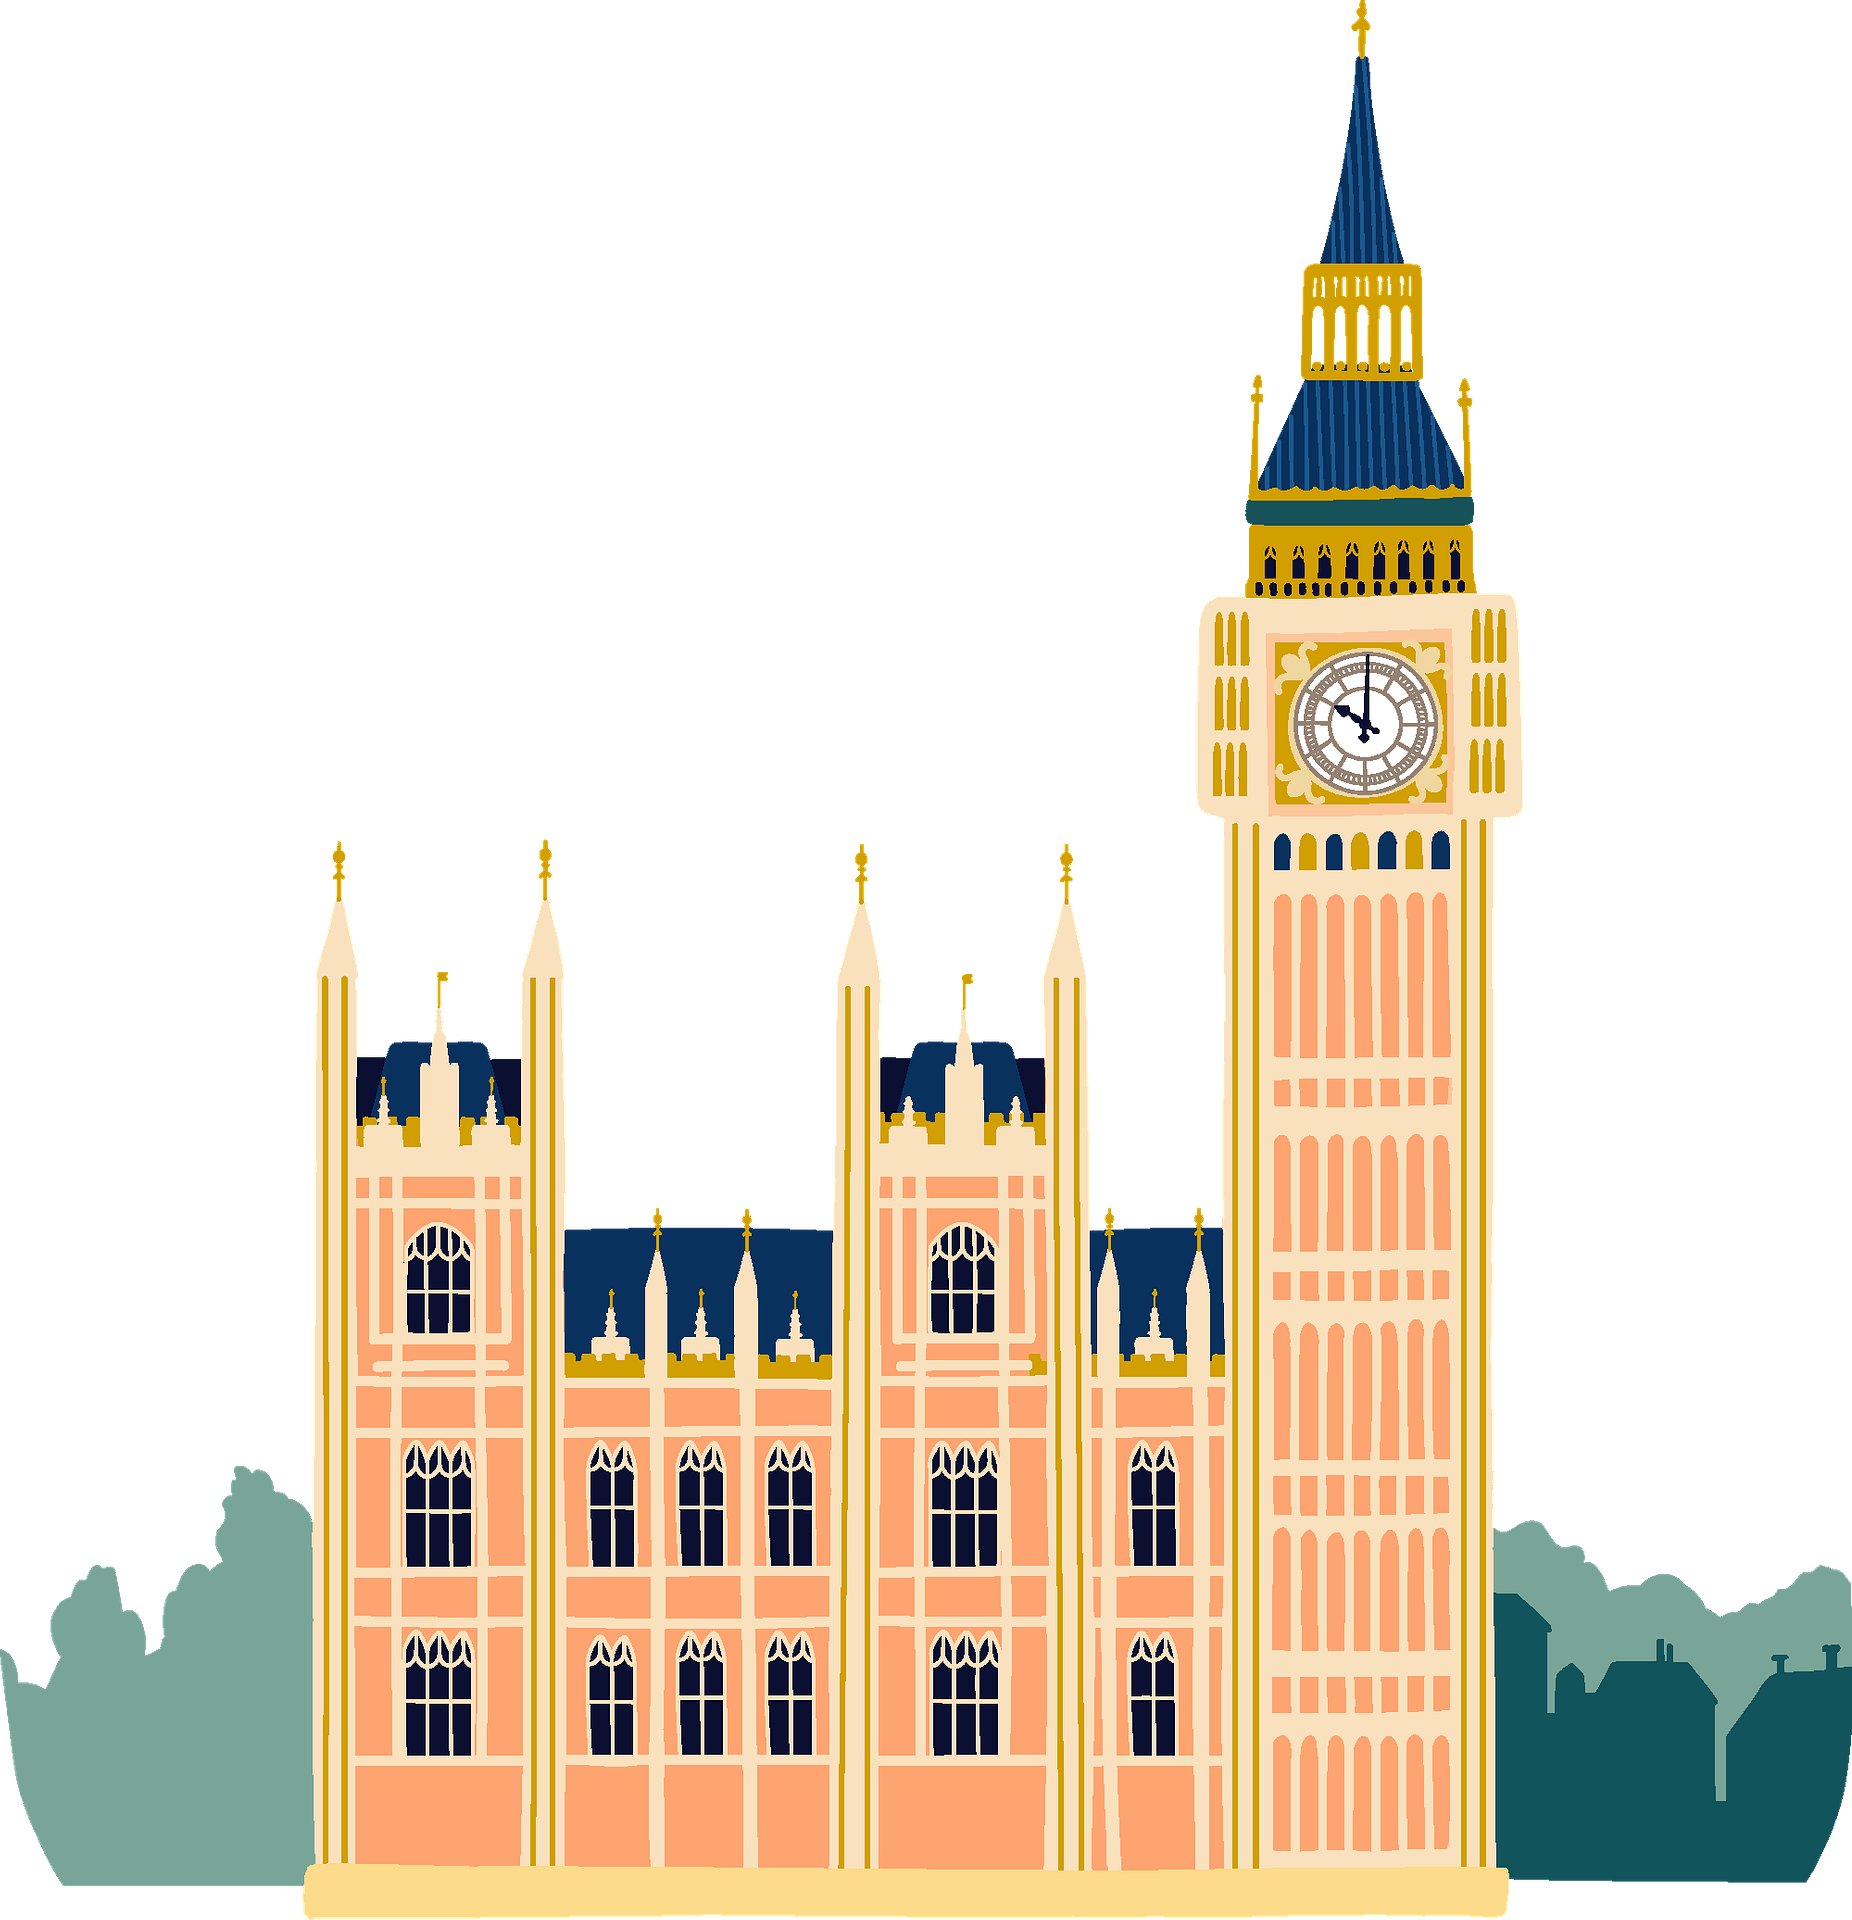 London Clock Tower PNG Free File Download